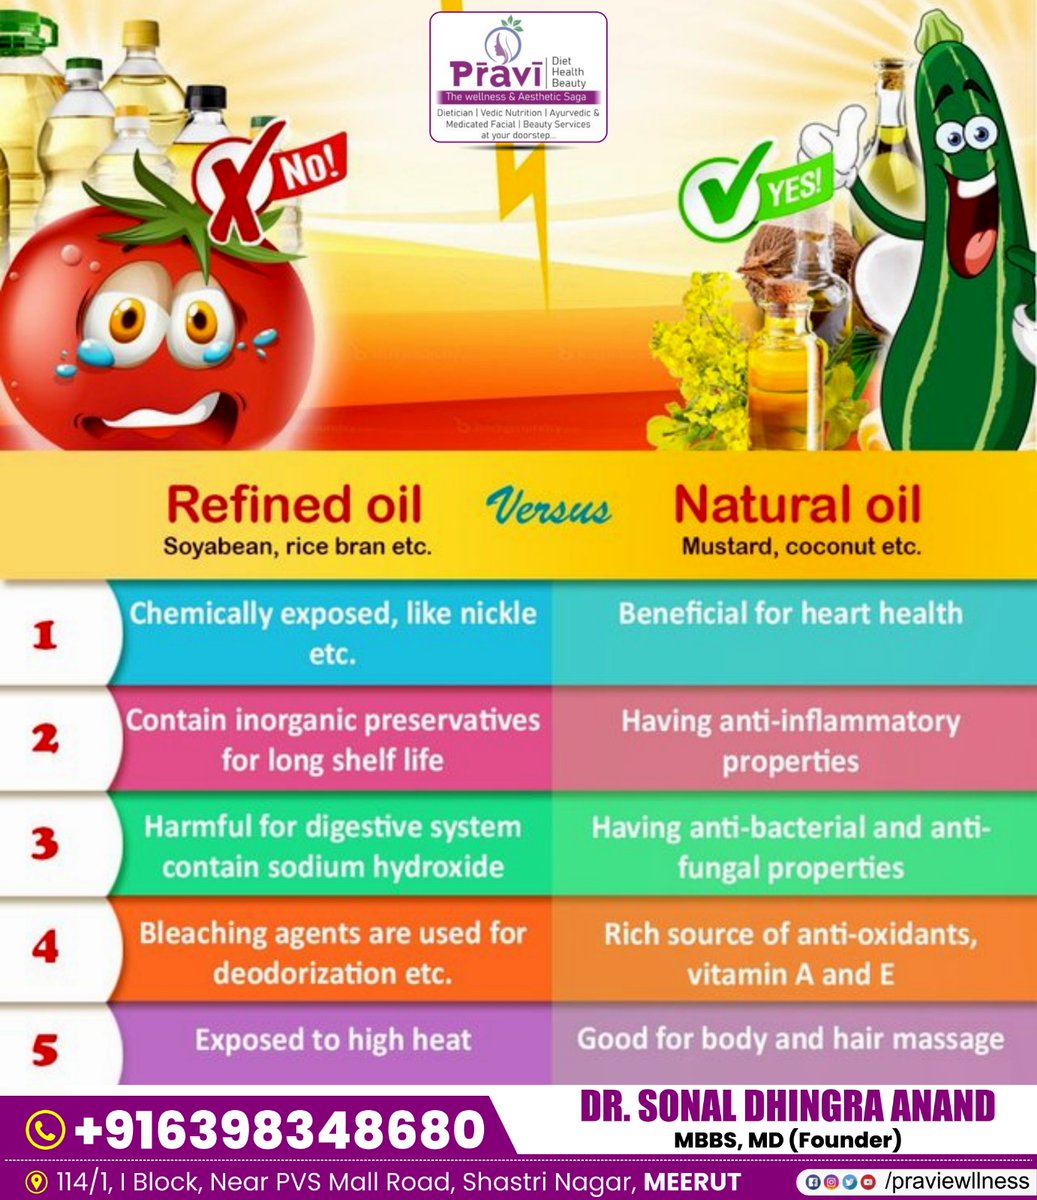 👎𝐑𝐞𝐟𝐢𝐧𝐞𝐝 𝐨𝐢𝐥 𝐕𝐞𝐫𝐬𝐮𝐬 𝐍𝐚𝐭𝐮𝐫𝐚𝐥 𝐨𝐢𝐥👍

#kidney #kidneyprotection #bloodsugar #cholesterol #omega #bestfoods #praviwellness #healthyfood #salt #disease #summerweather #heat #fruits #dairyproducts #leanprotein #nutrition #tips #Foods #Vegetables #vision